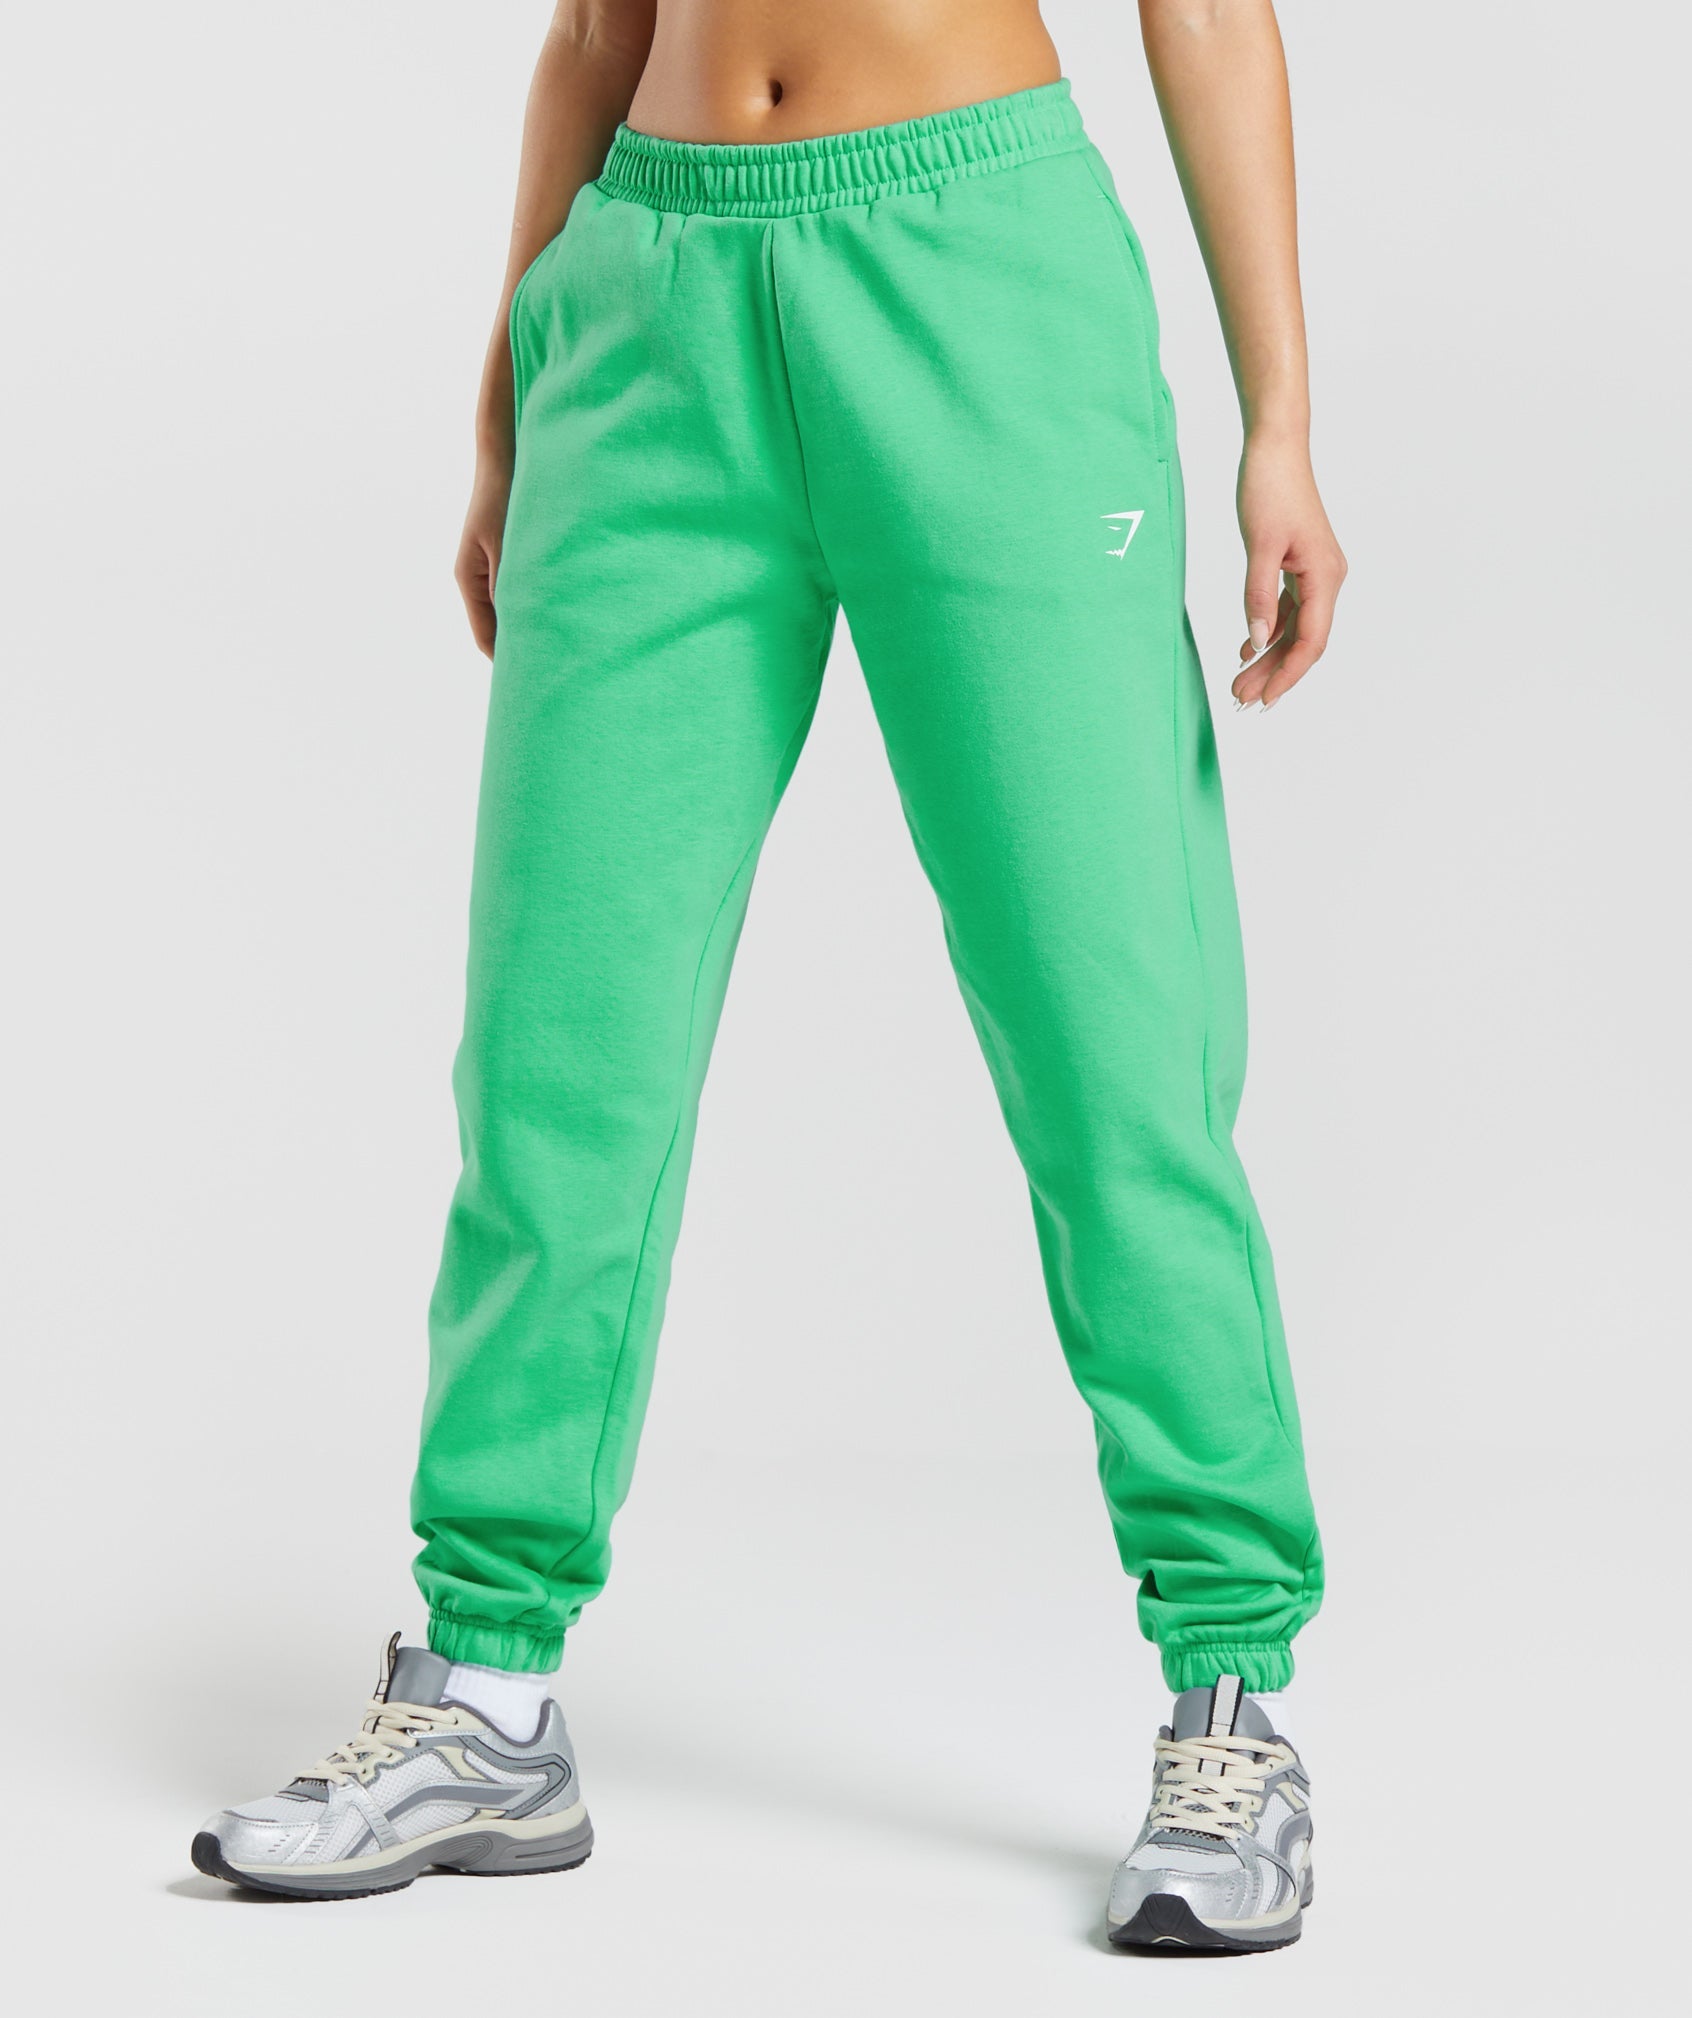 Gymshark Recess Joggers (S) - 'Light Green' Green - $36 (40% Off Retail) -  From Aimee